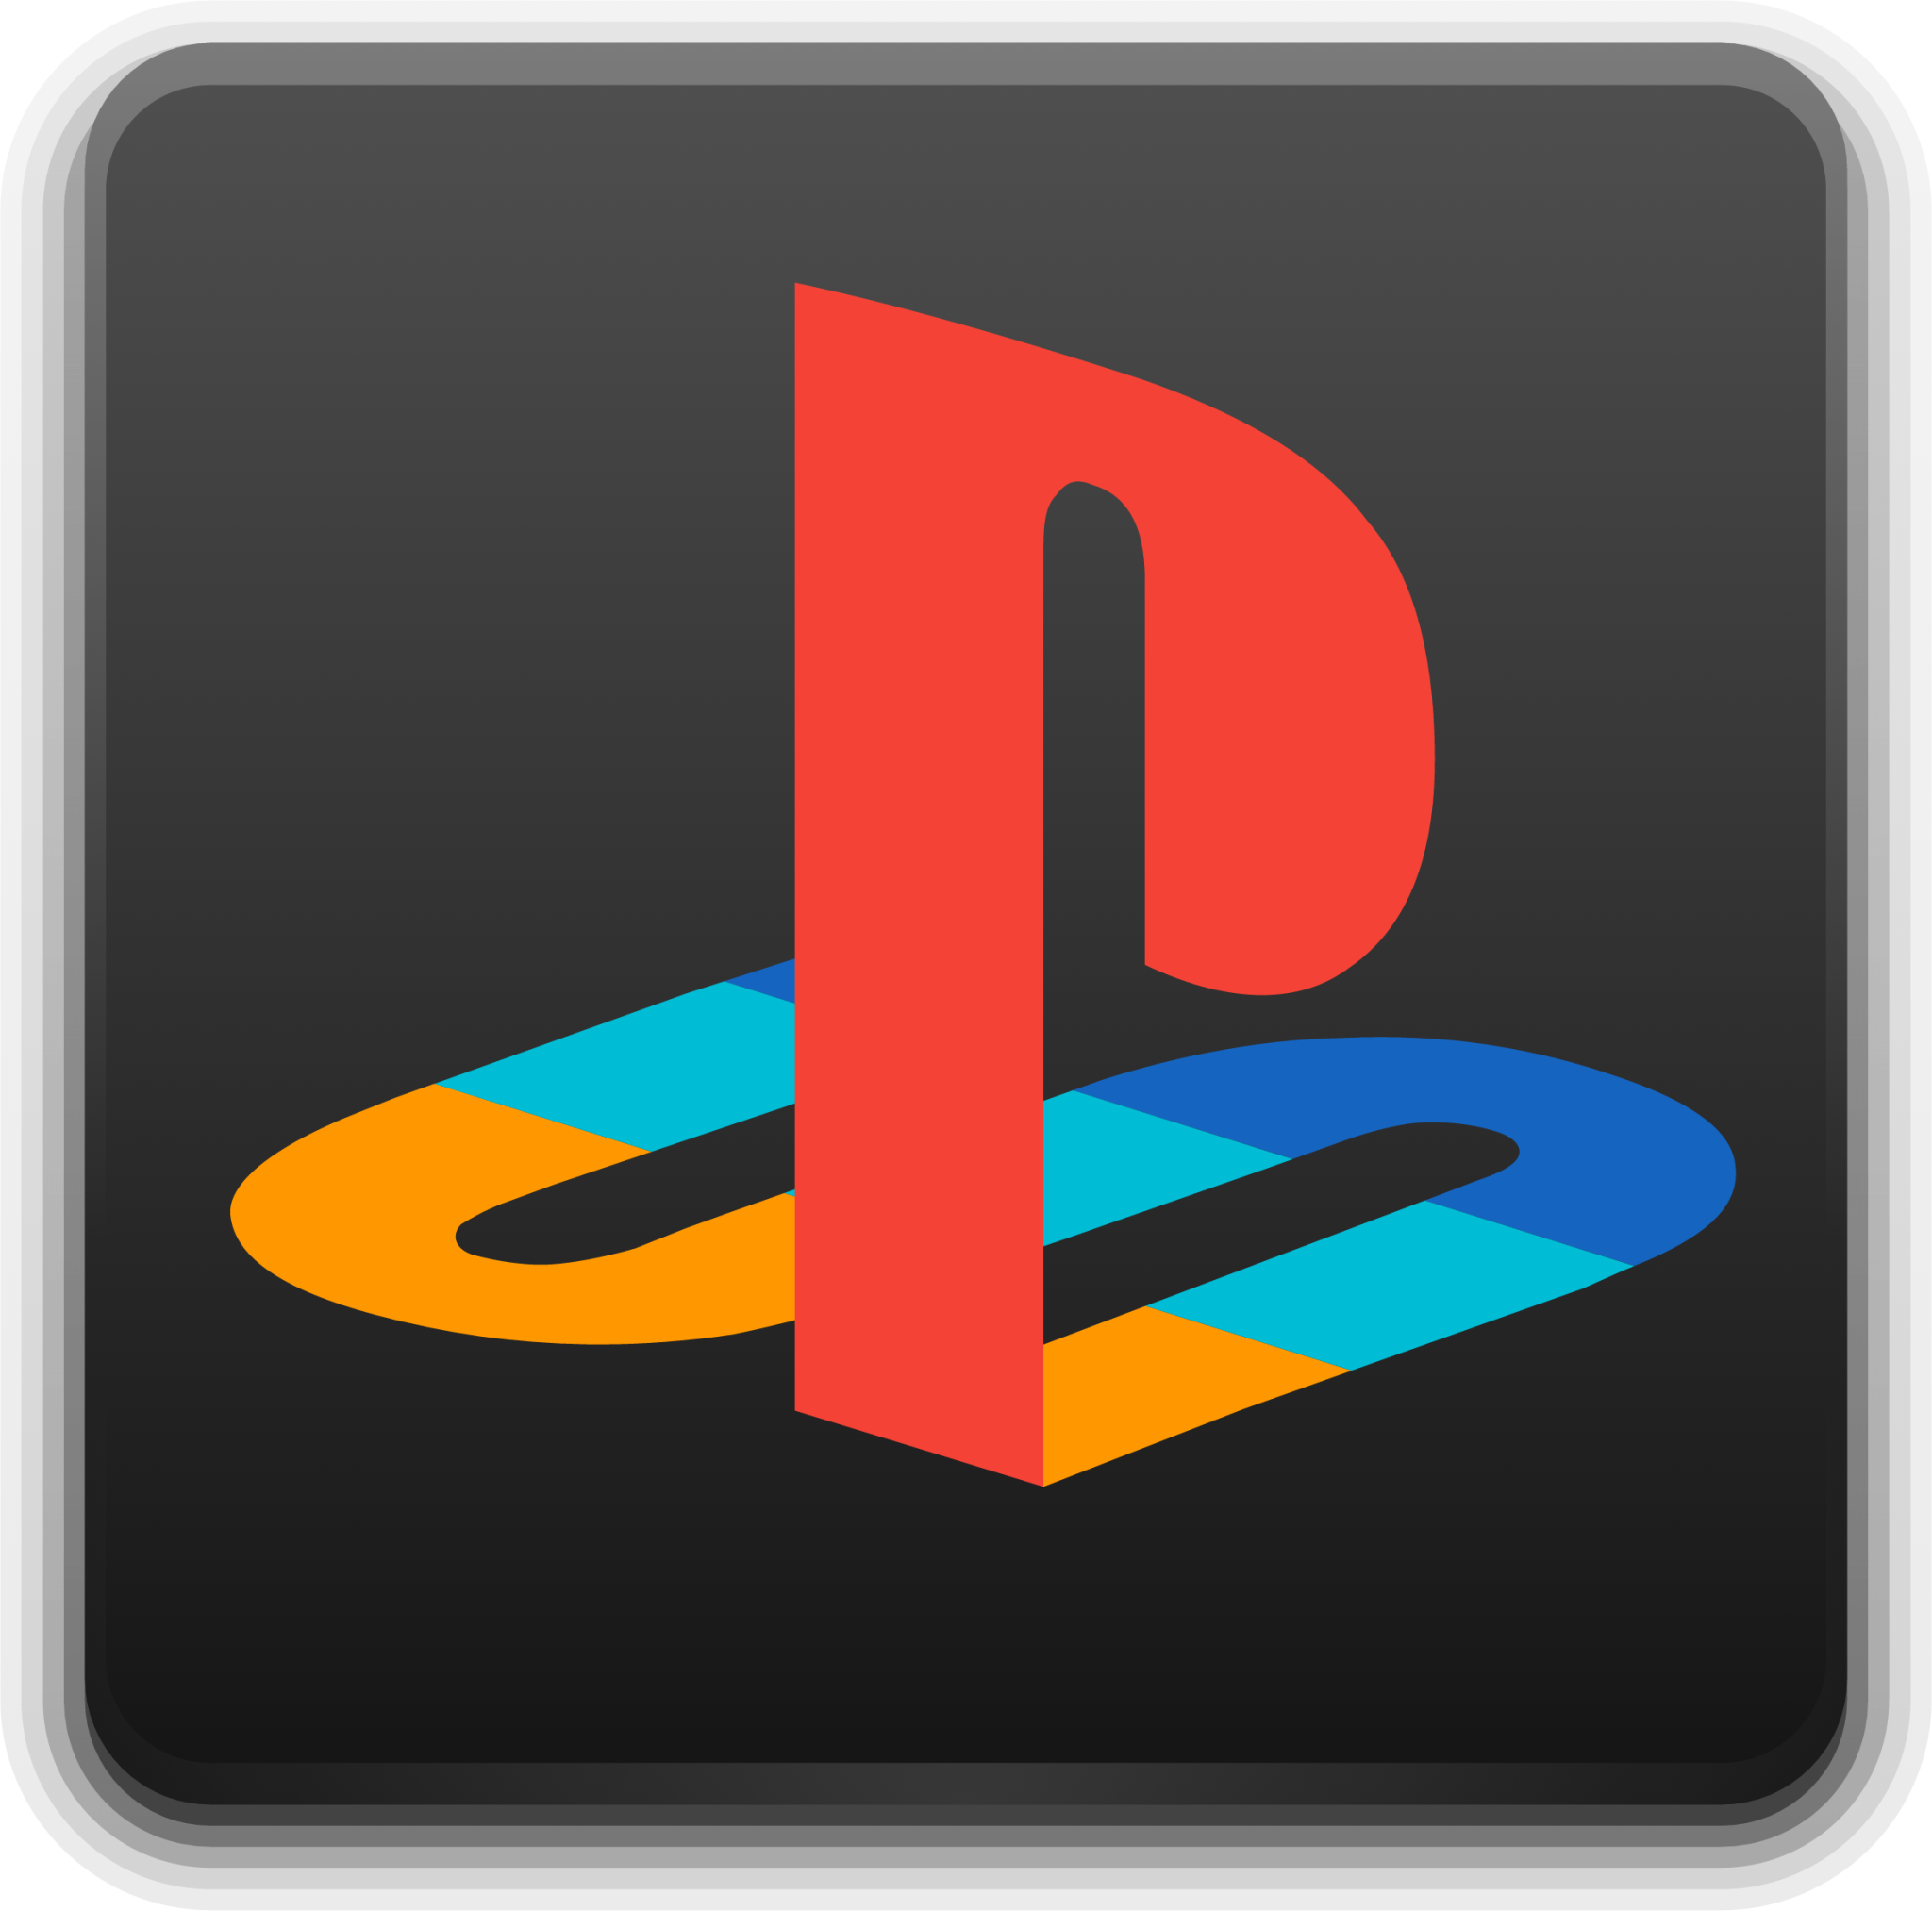 Playstation icon. Sony PLAYSTATION 1 logo. Ps1 icon. Значок ps4. Логотип сони плейстейшен 2.